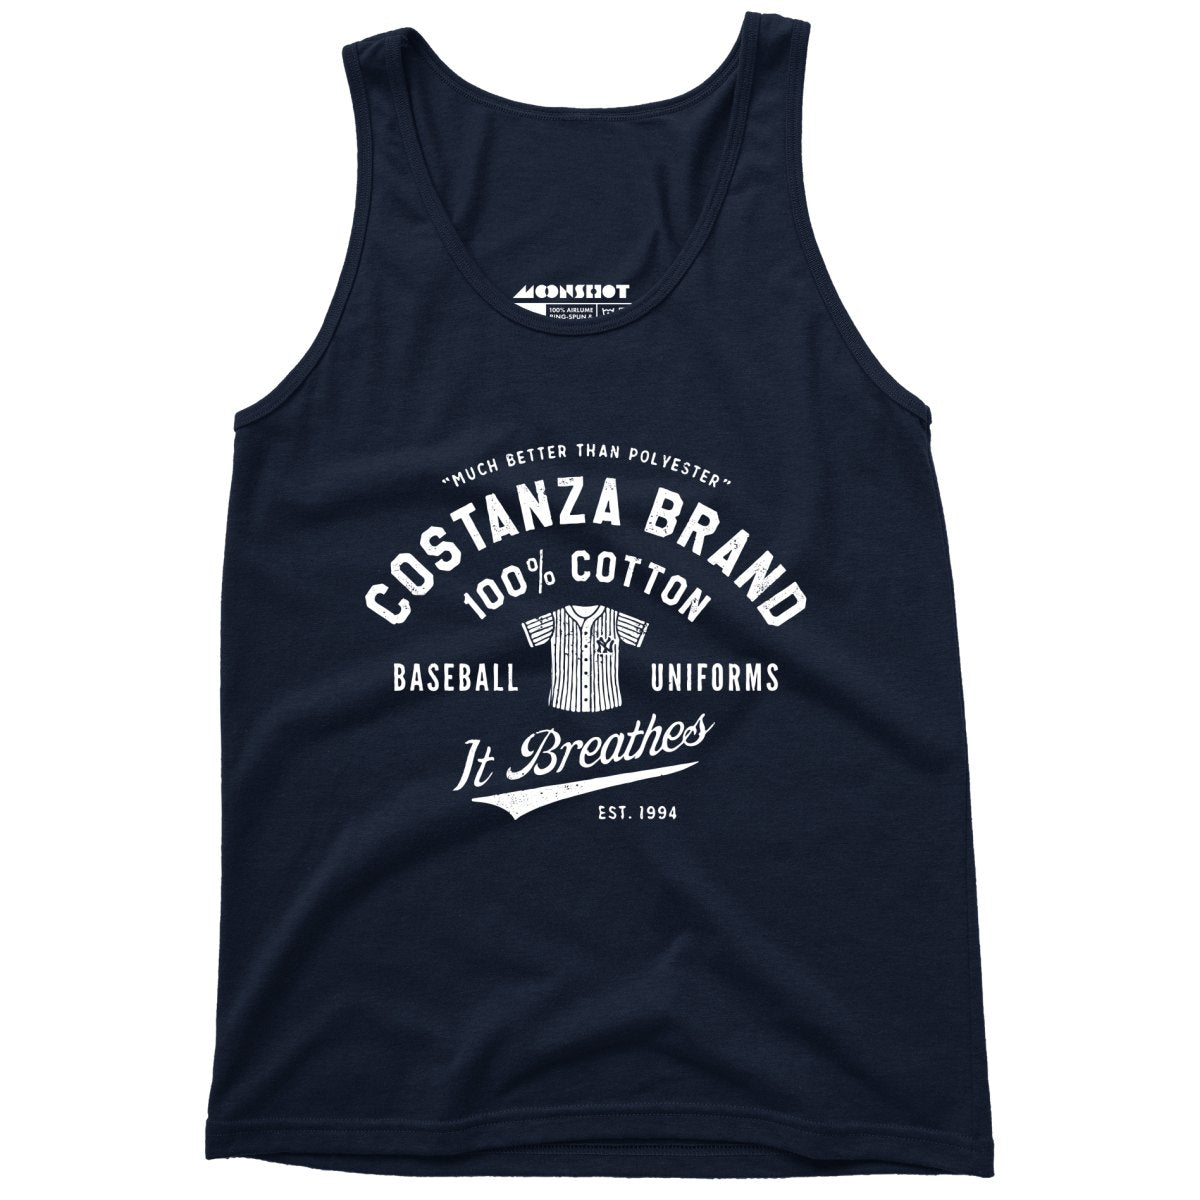 Costanza Brand Cotton Baseball Uniforms - Unisex Tank Top